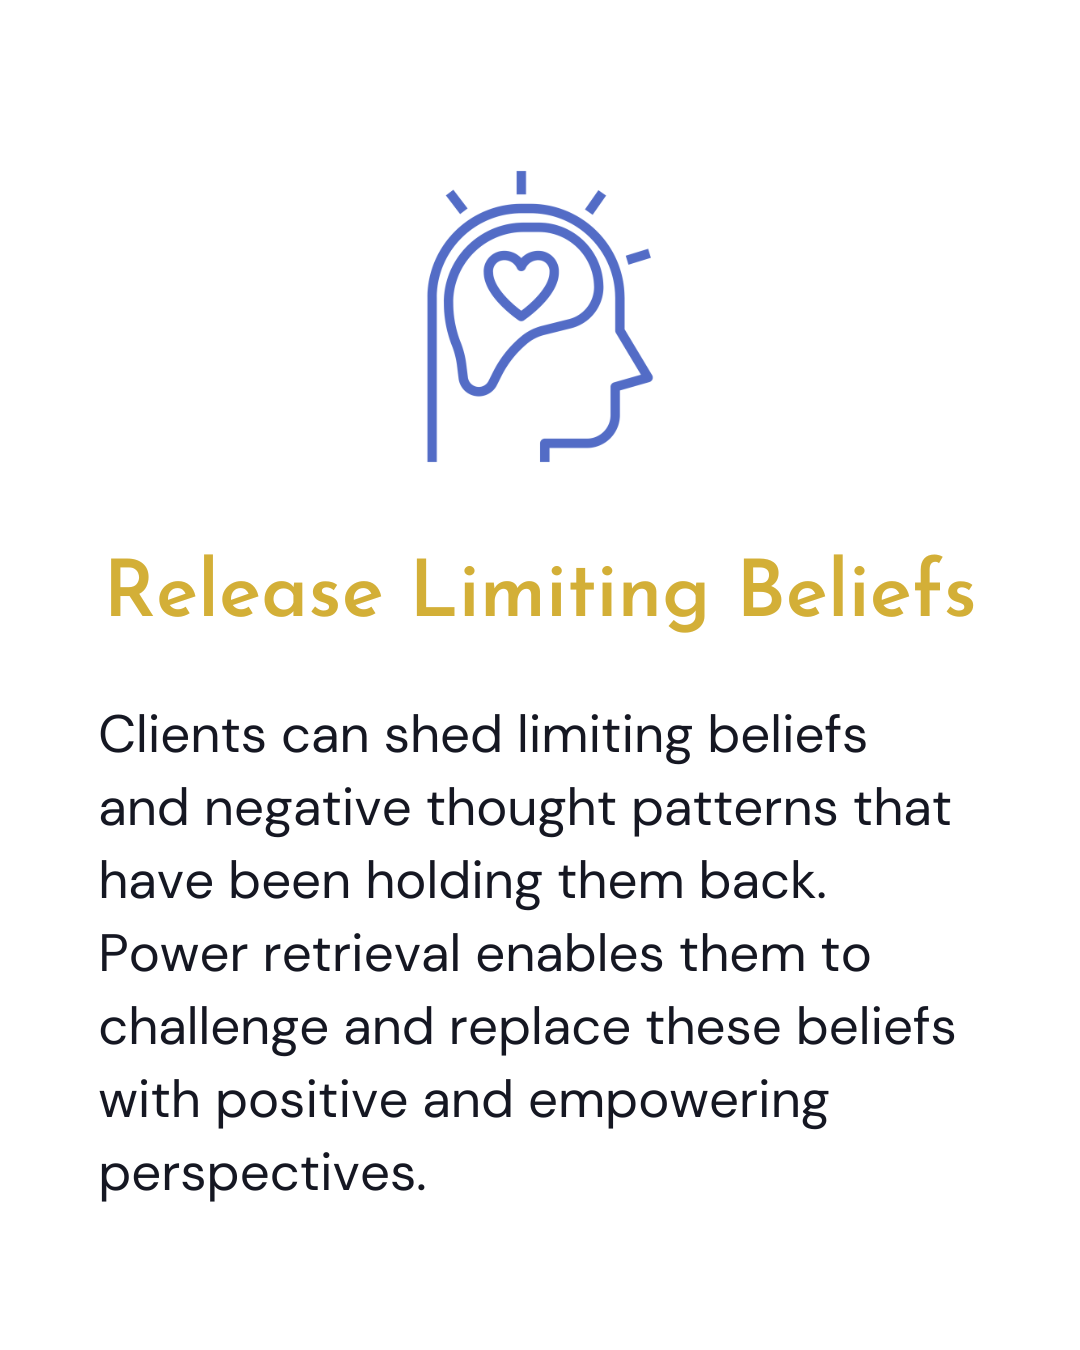 power-retrieval-benefits-beliefs